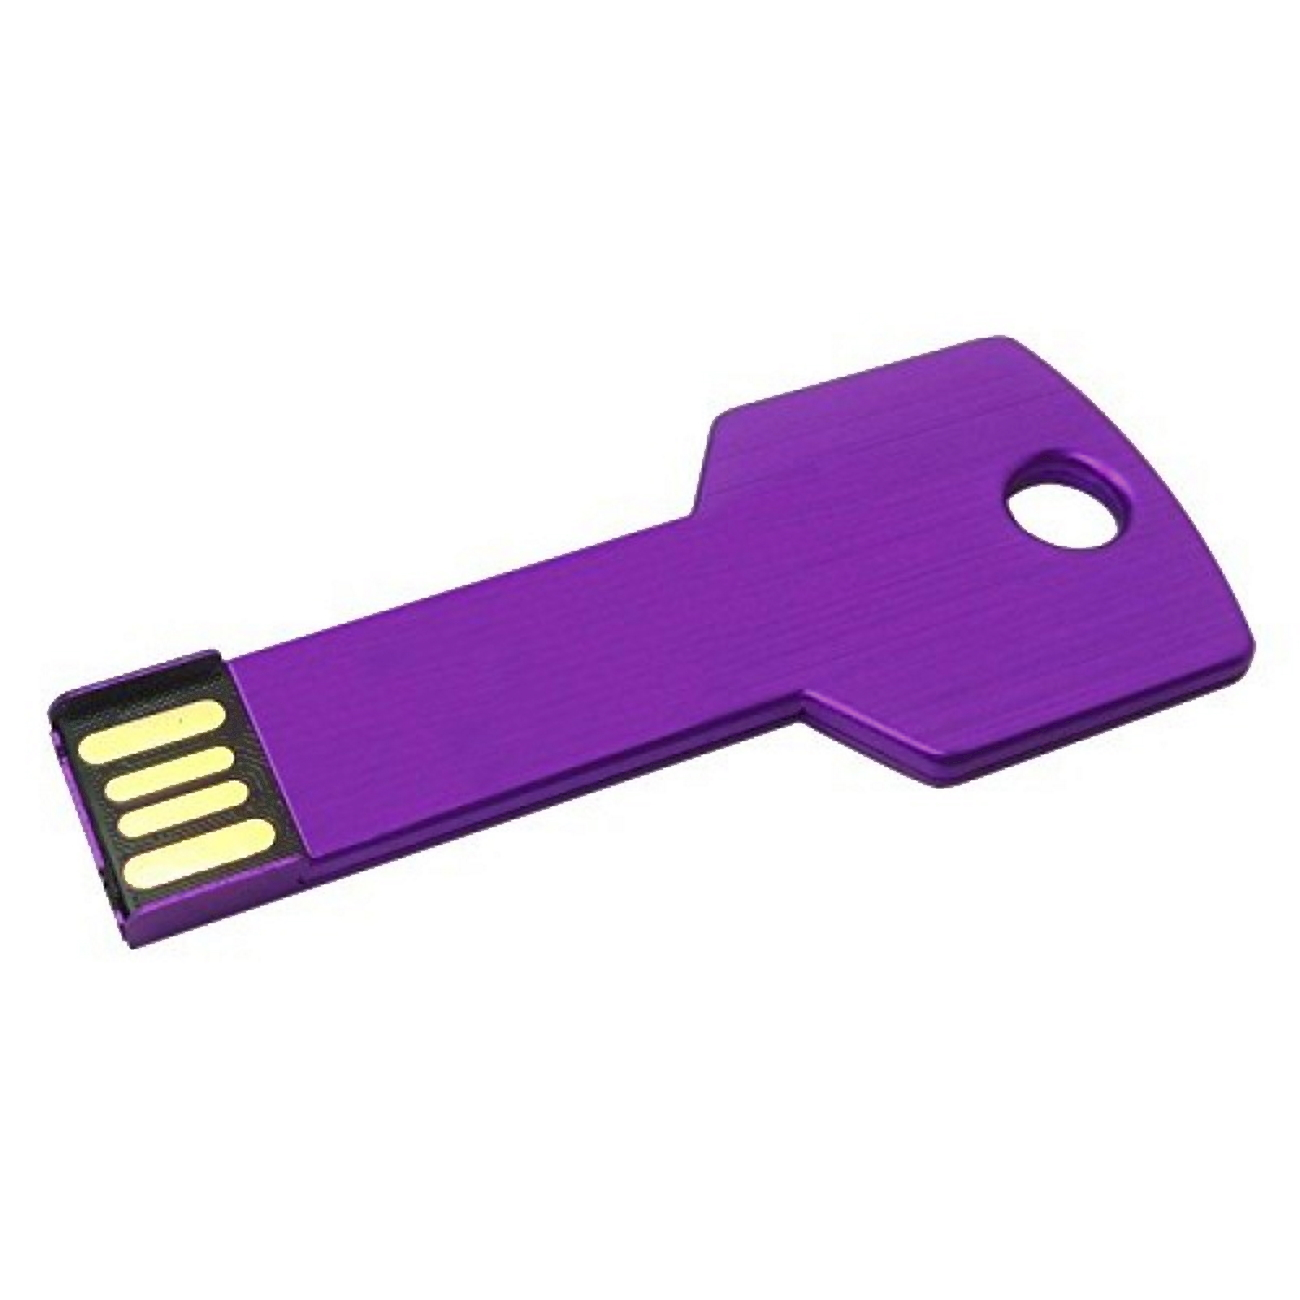 GB) USB Key 2GB 2 GERMANY (Lila, Lila USB-Stick